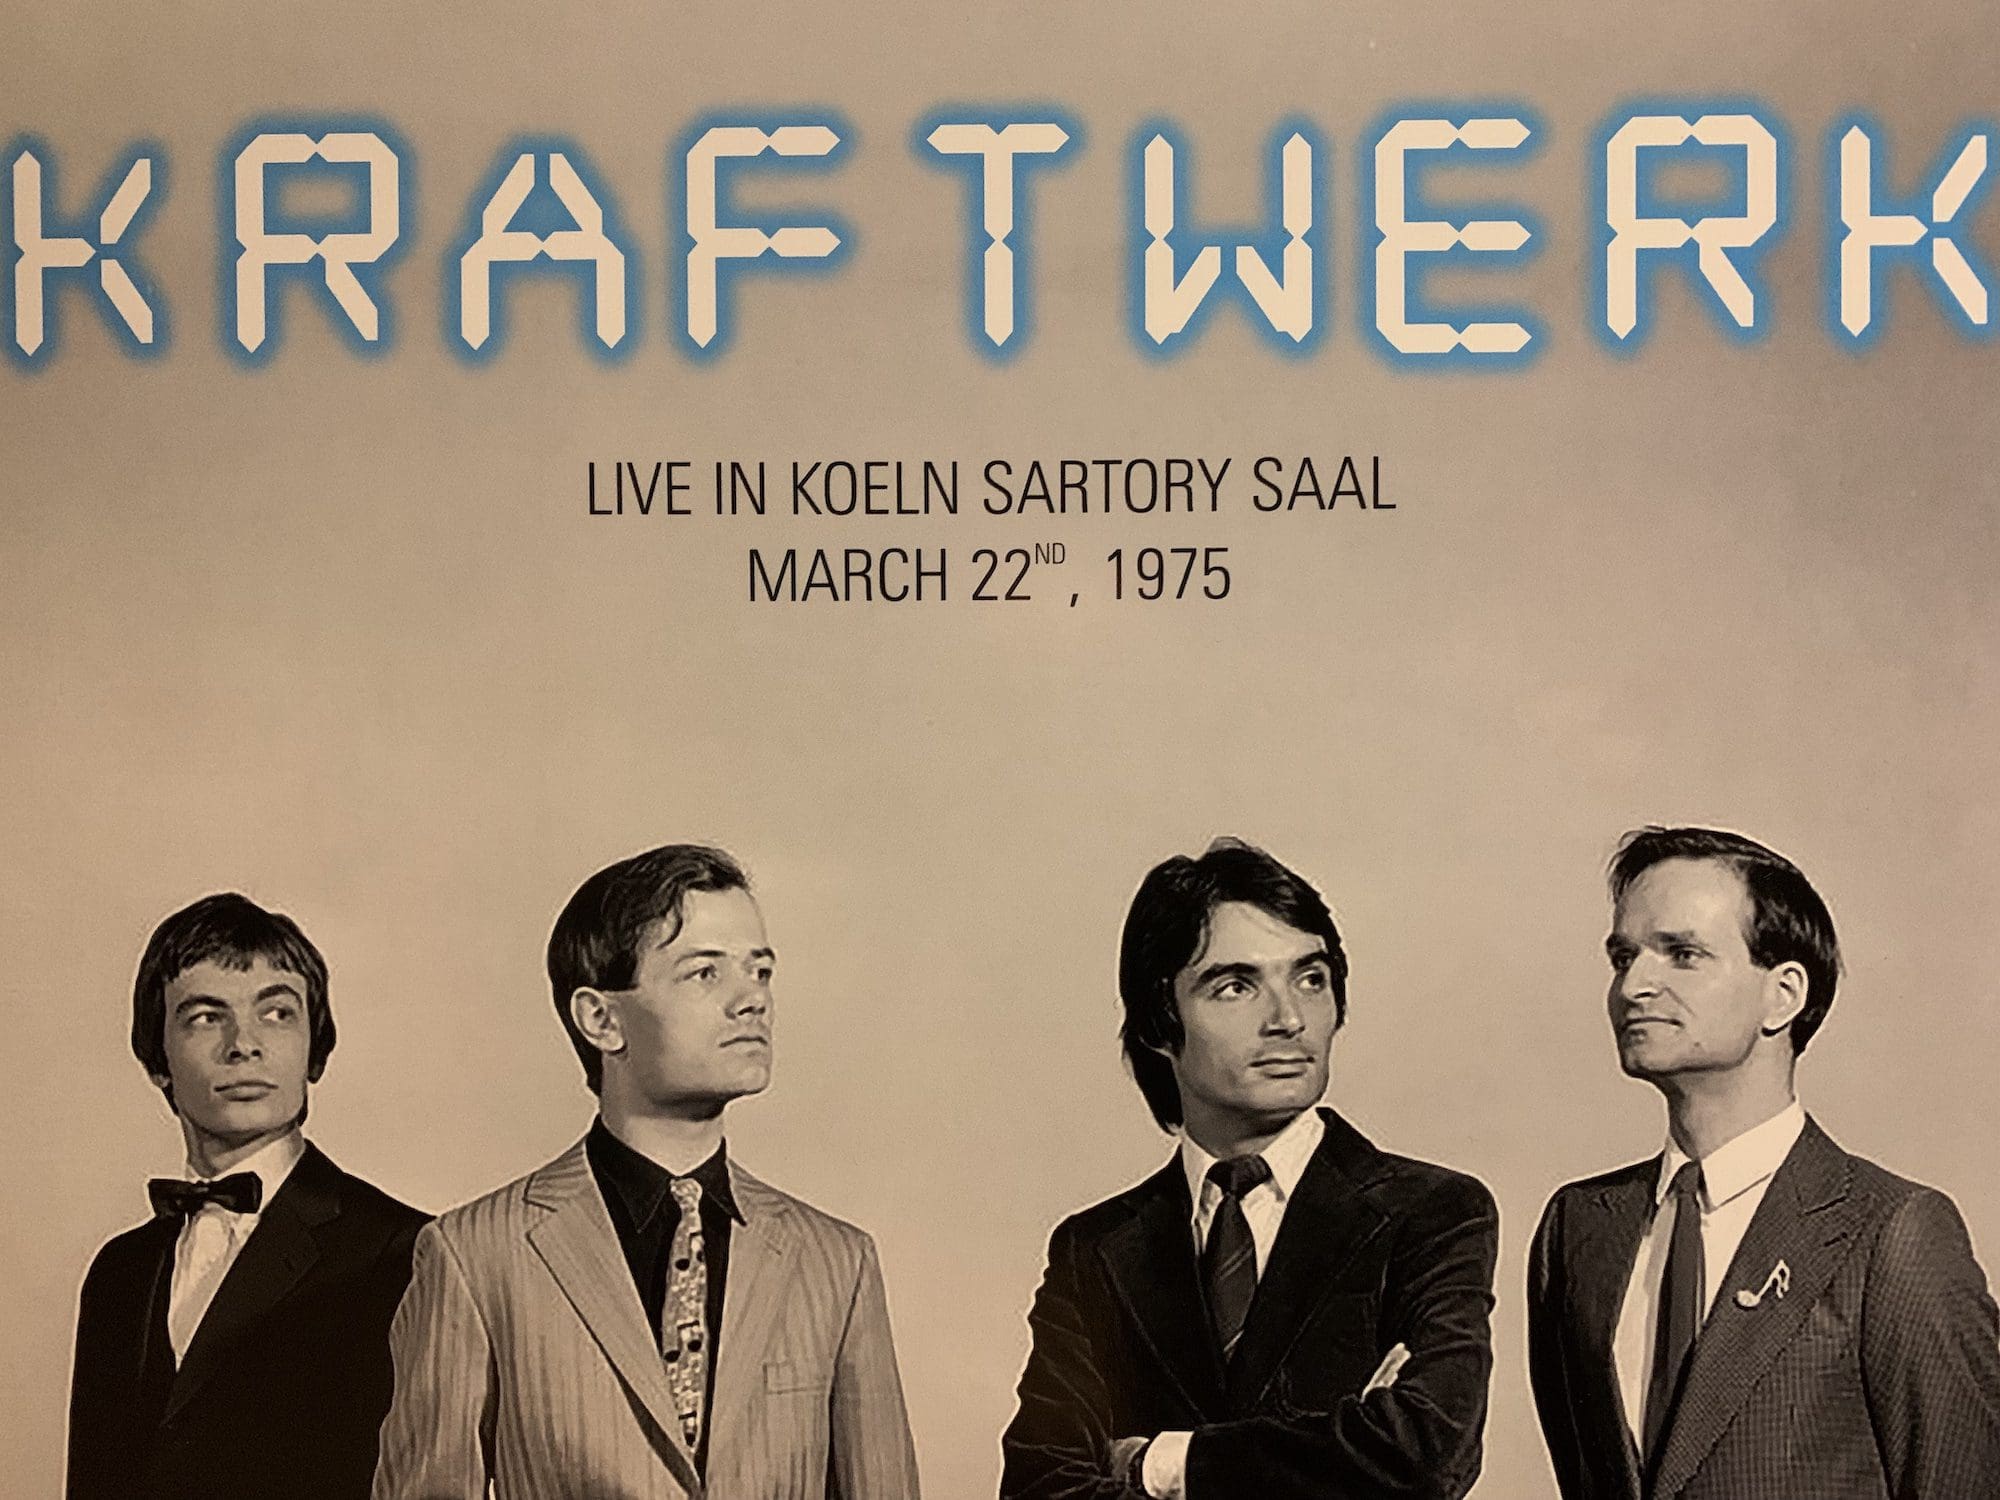 Kraftwerk record cover